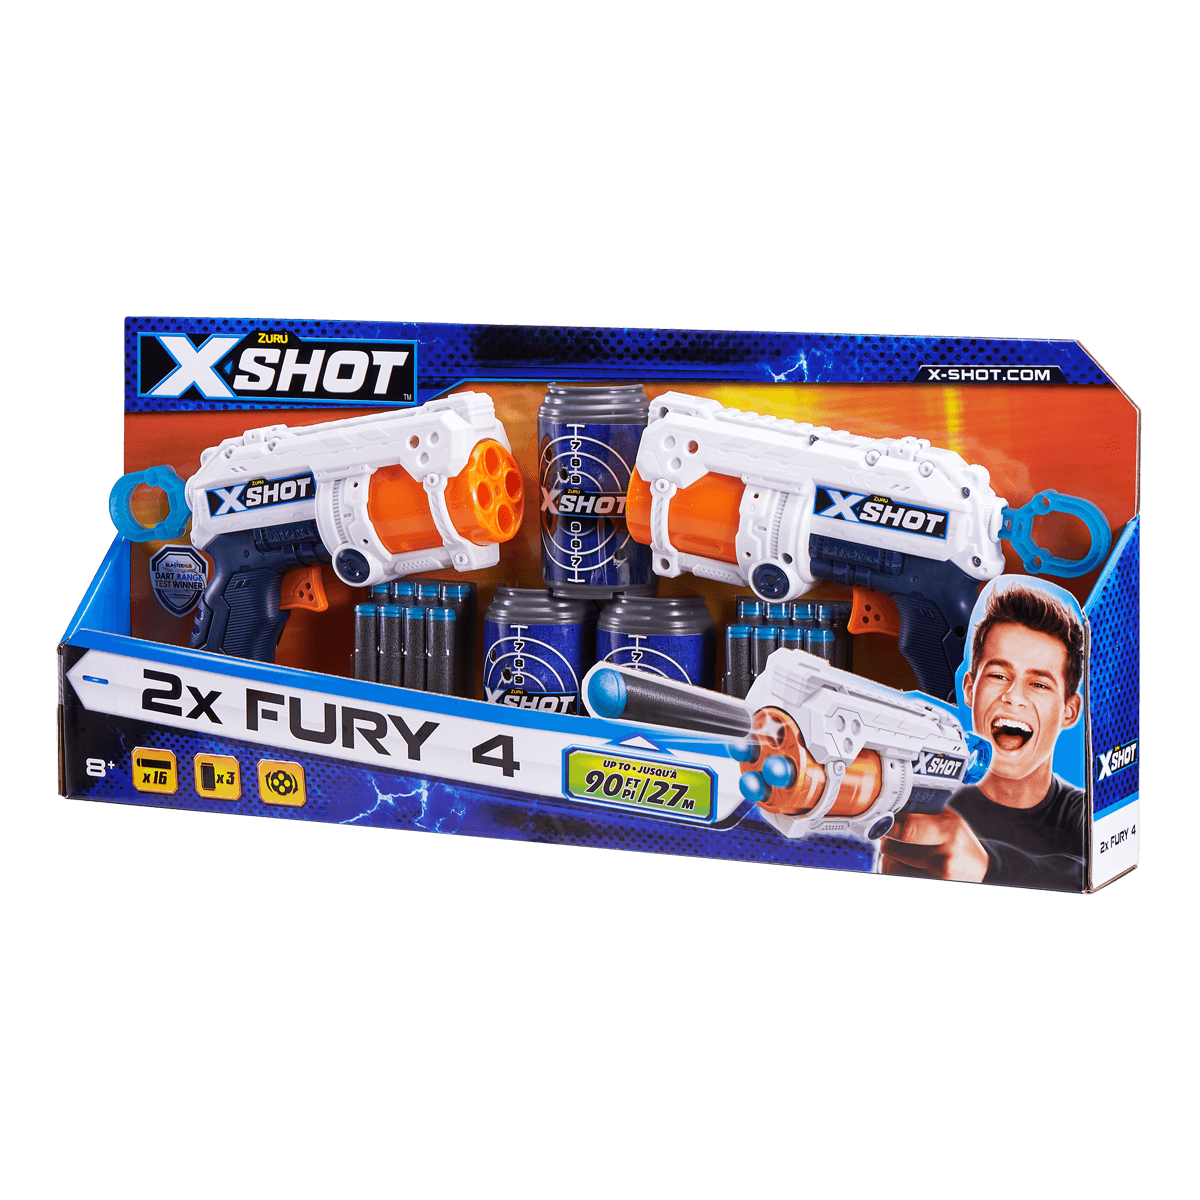 X-Shot Double Fury 4 Combo Foam Blaster Pack - 16 Darts 3 Cans By ZURU